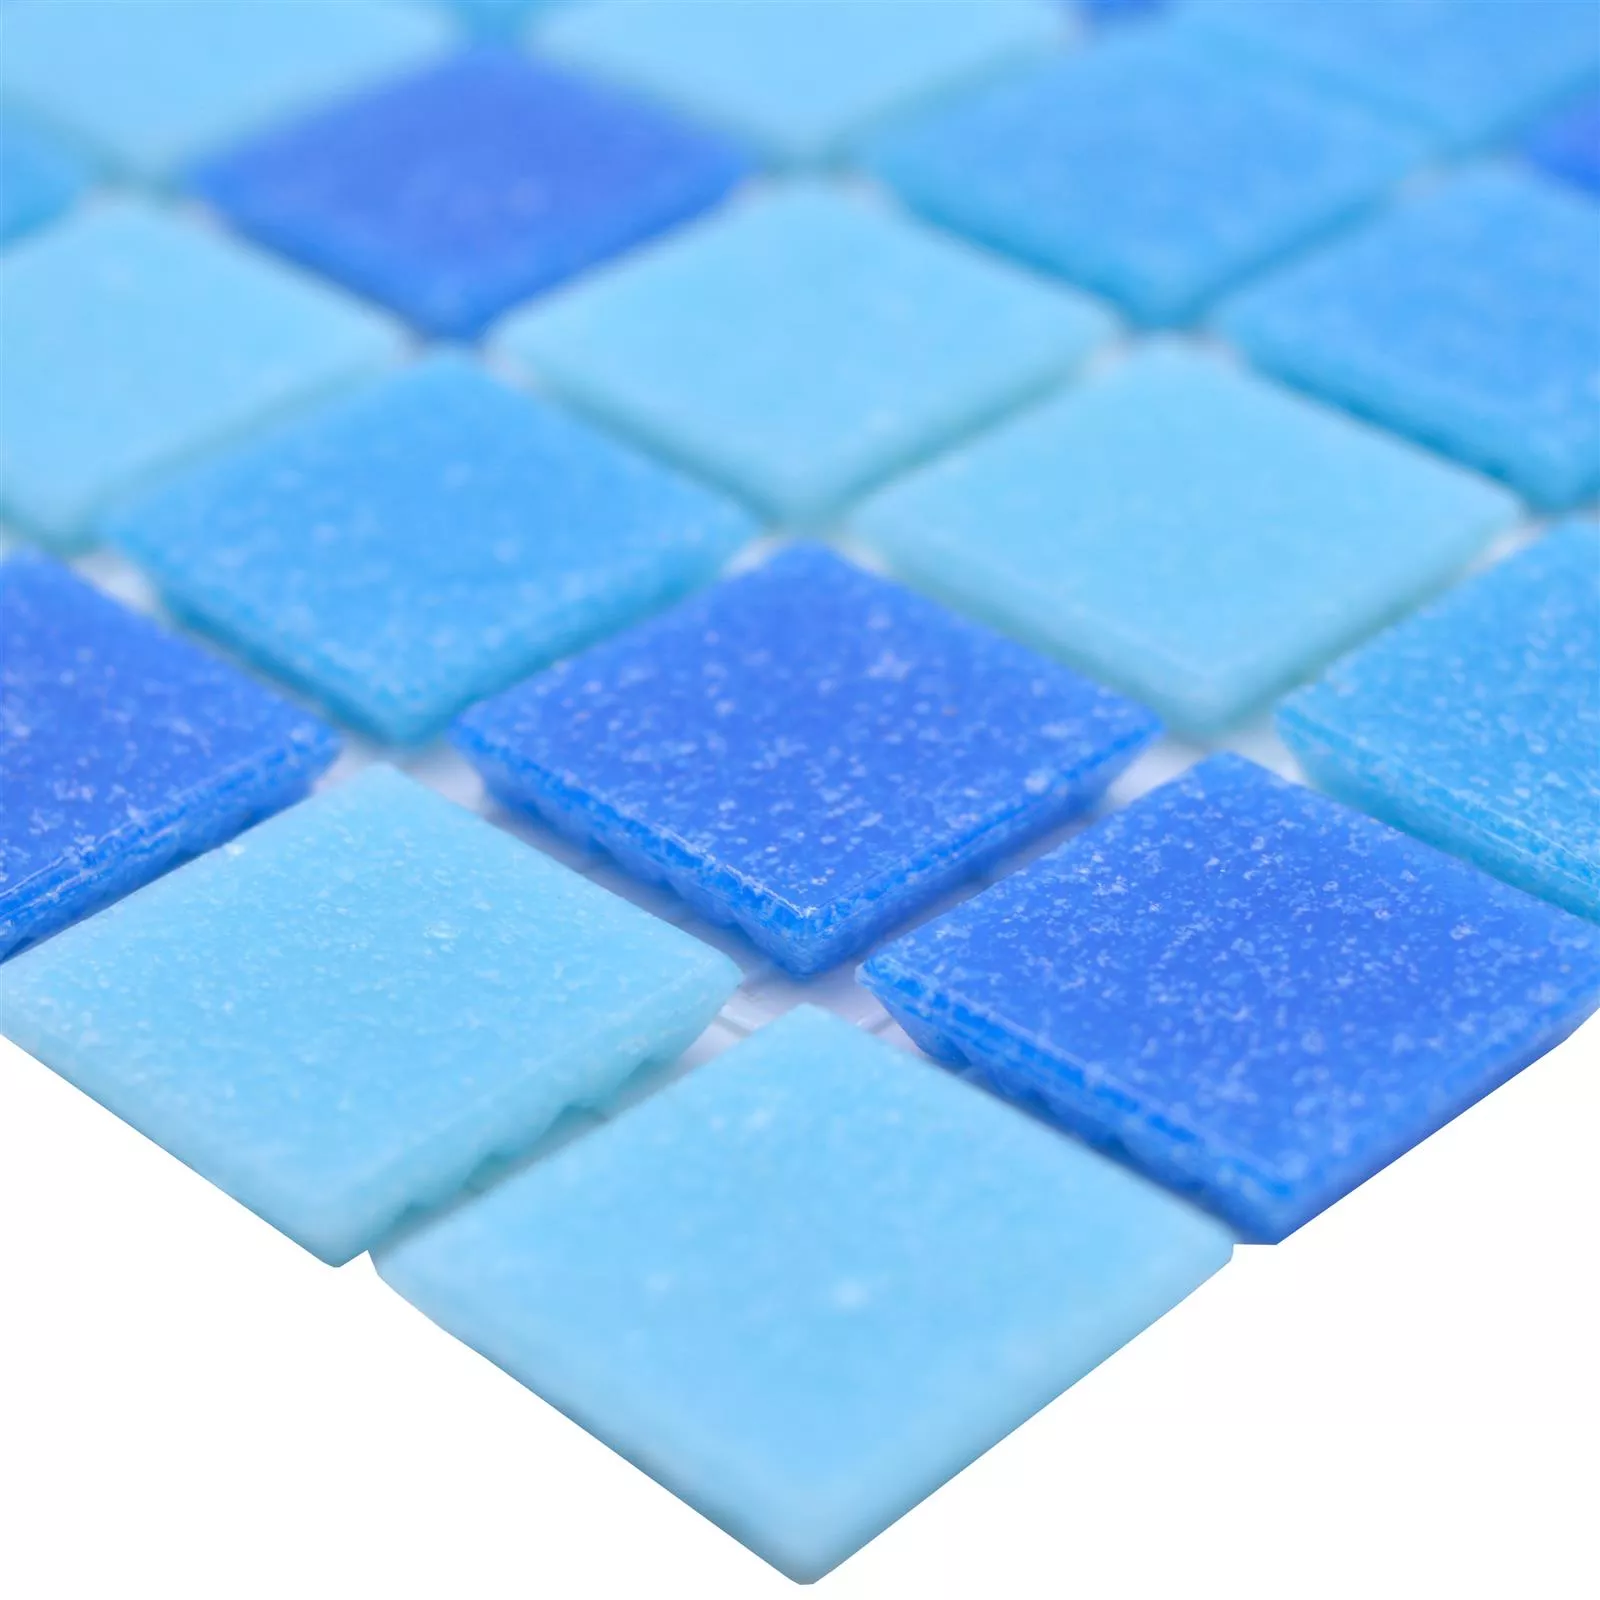 Plavecký Bazén Mozaika North Sea Modrá Tyrkysový Mix